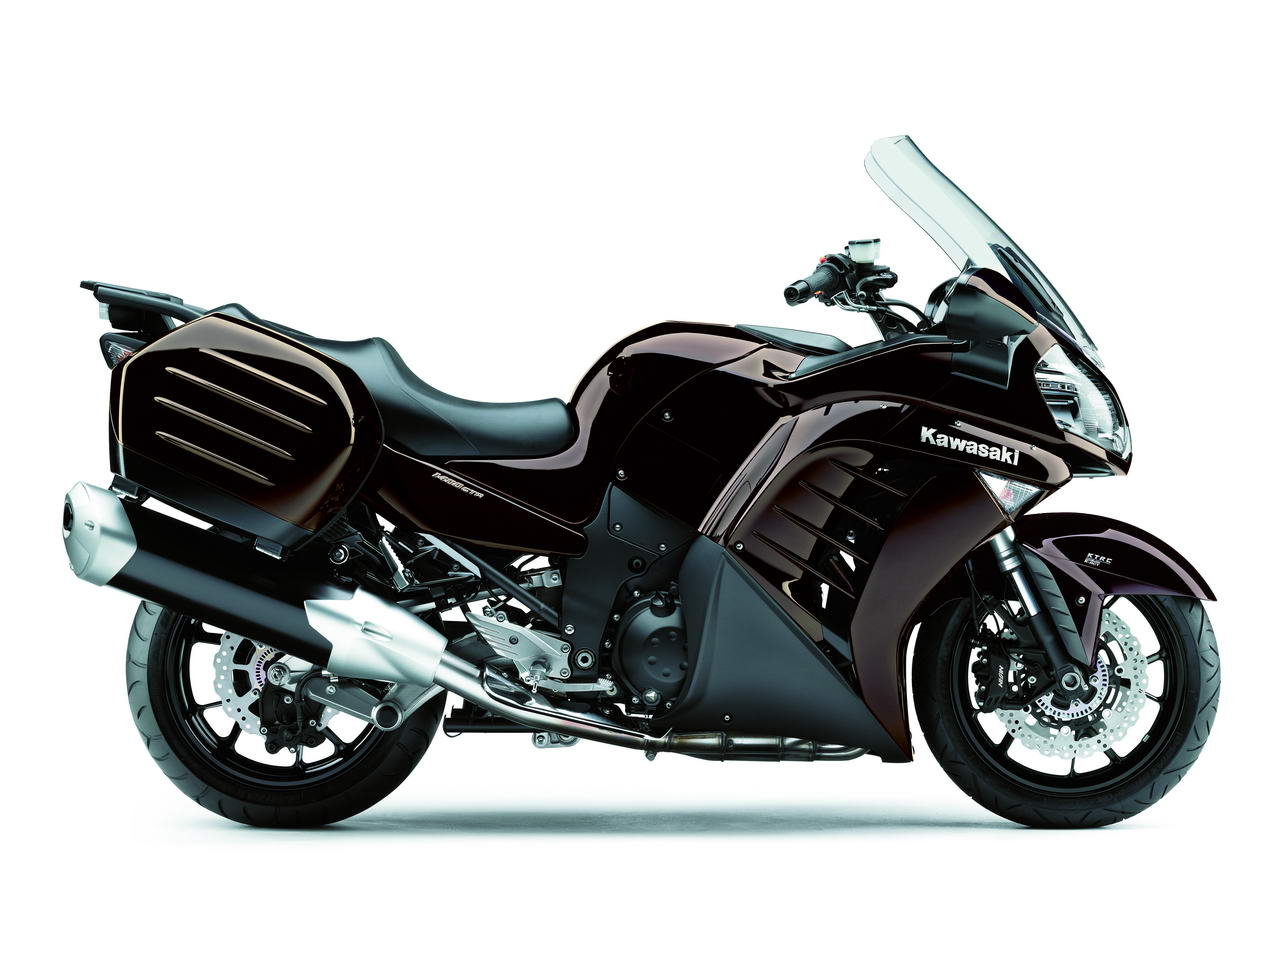 Listino Yamaha FJR1300 A Sport-touring - image 15498_kawasaki-1400gtr on https://moto.motori.net